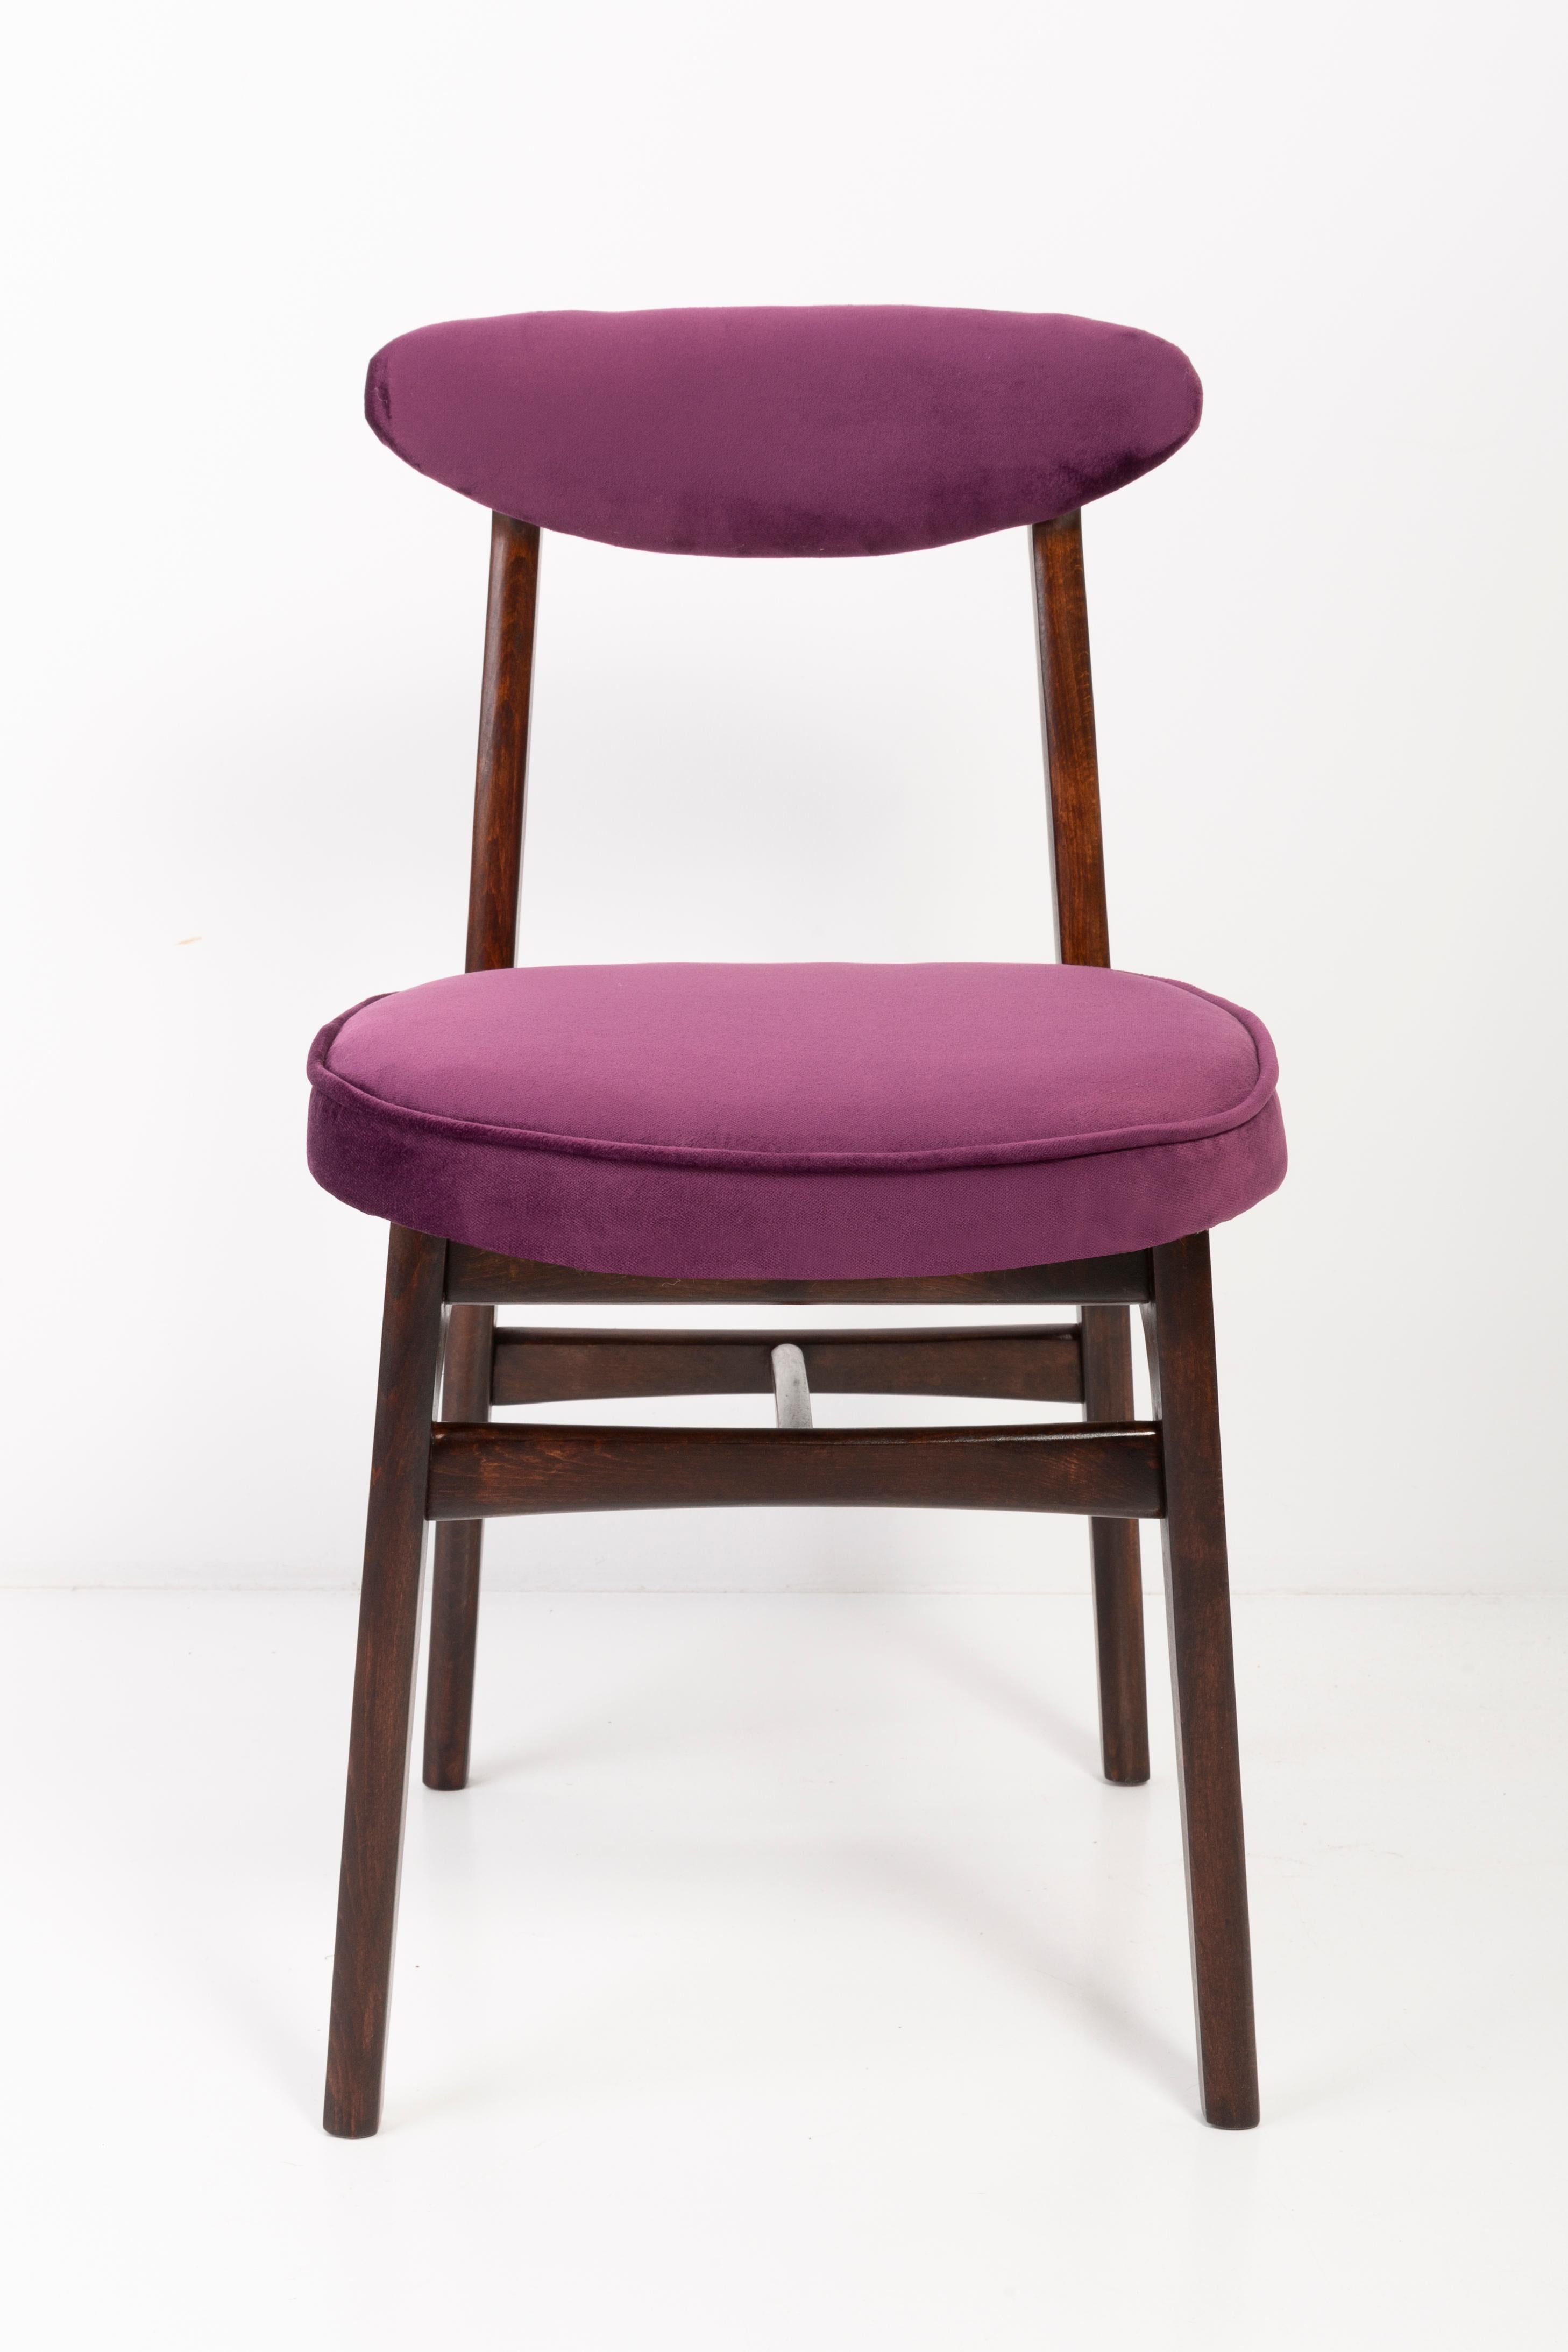 Textile Twelve 20th Century Plum Violet Velvet Rajmund Halas Chairs, Europe, 1960s For Sale